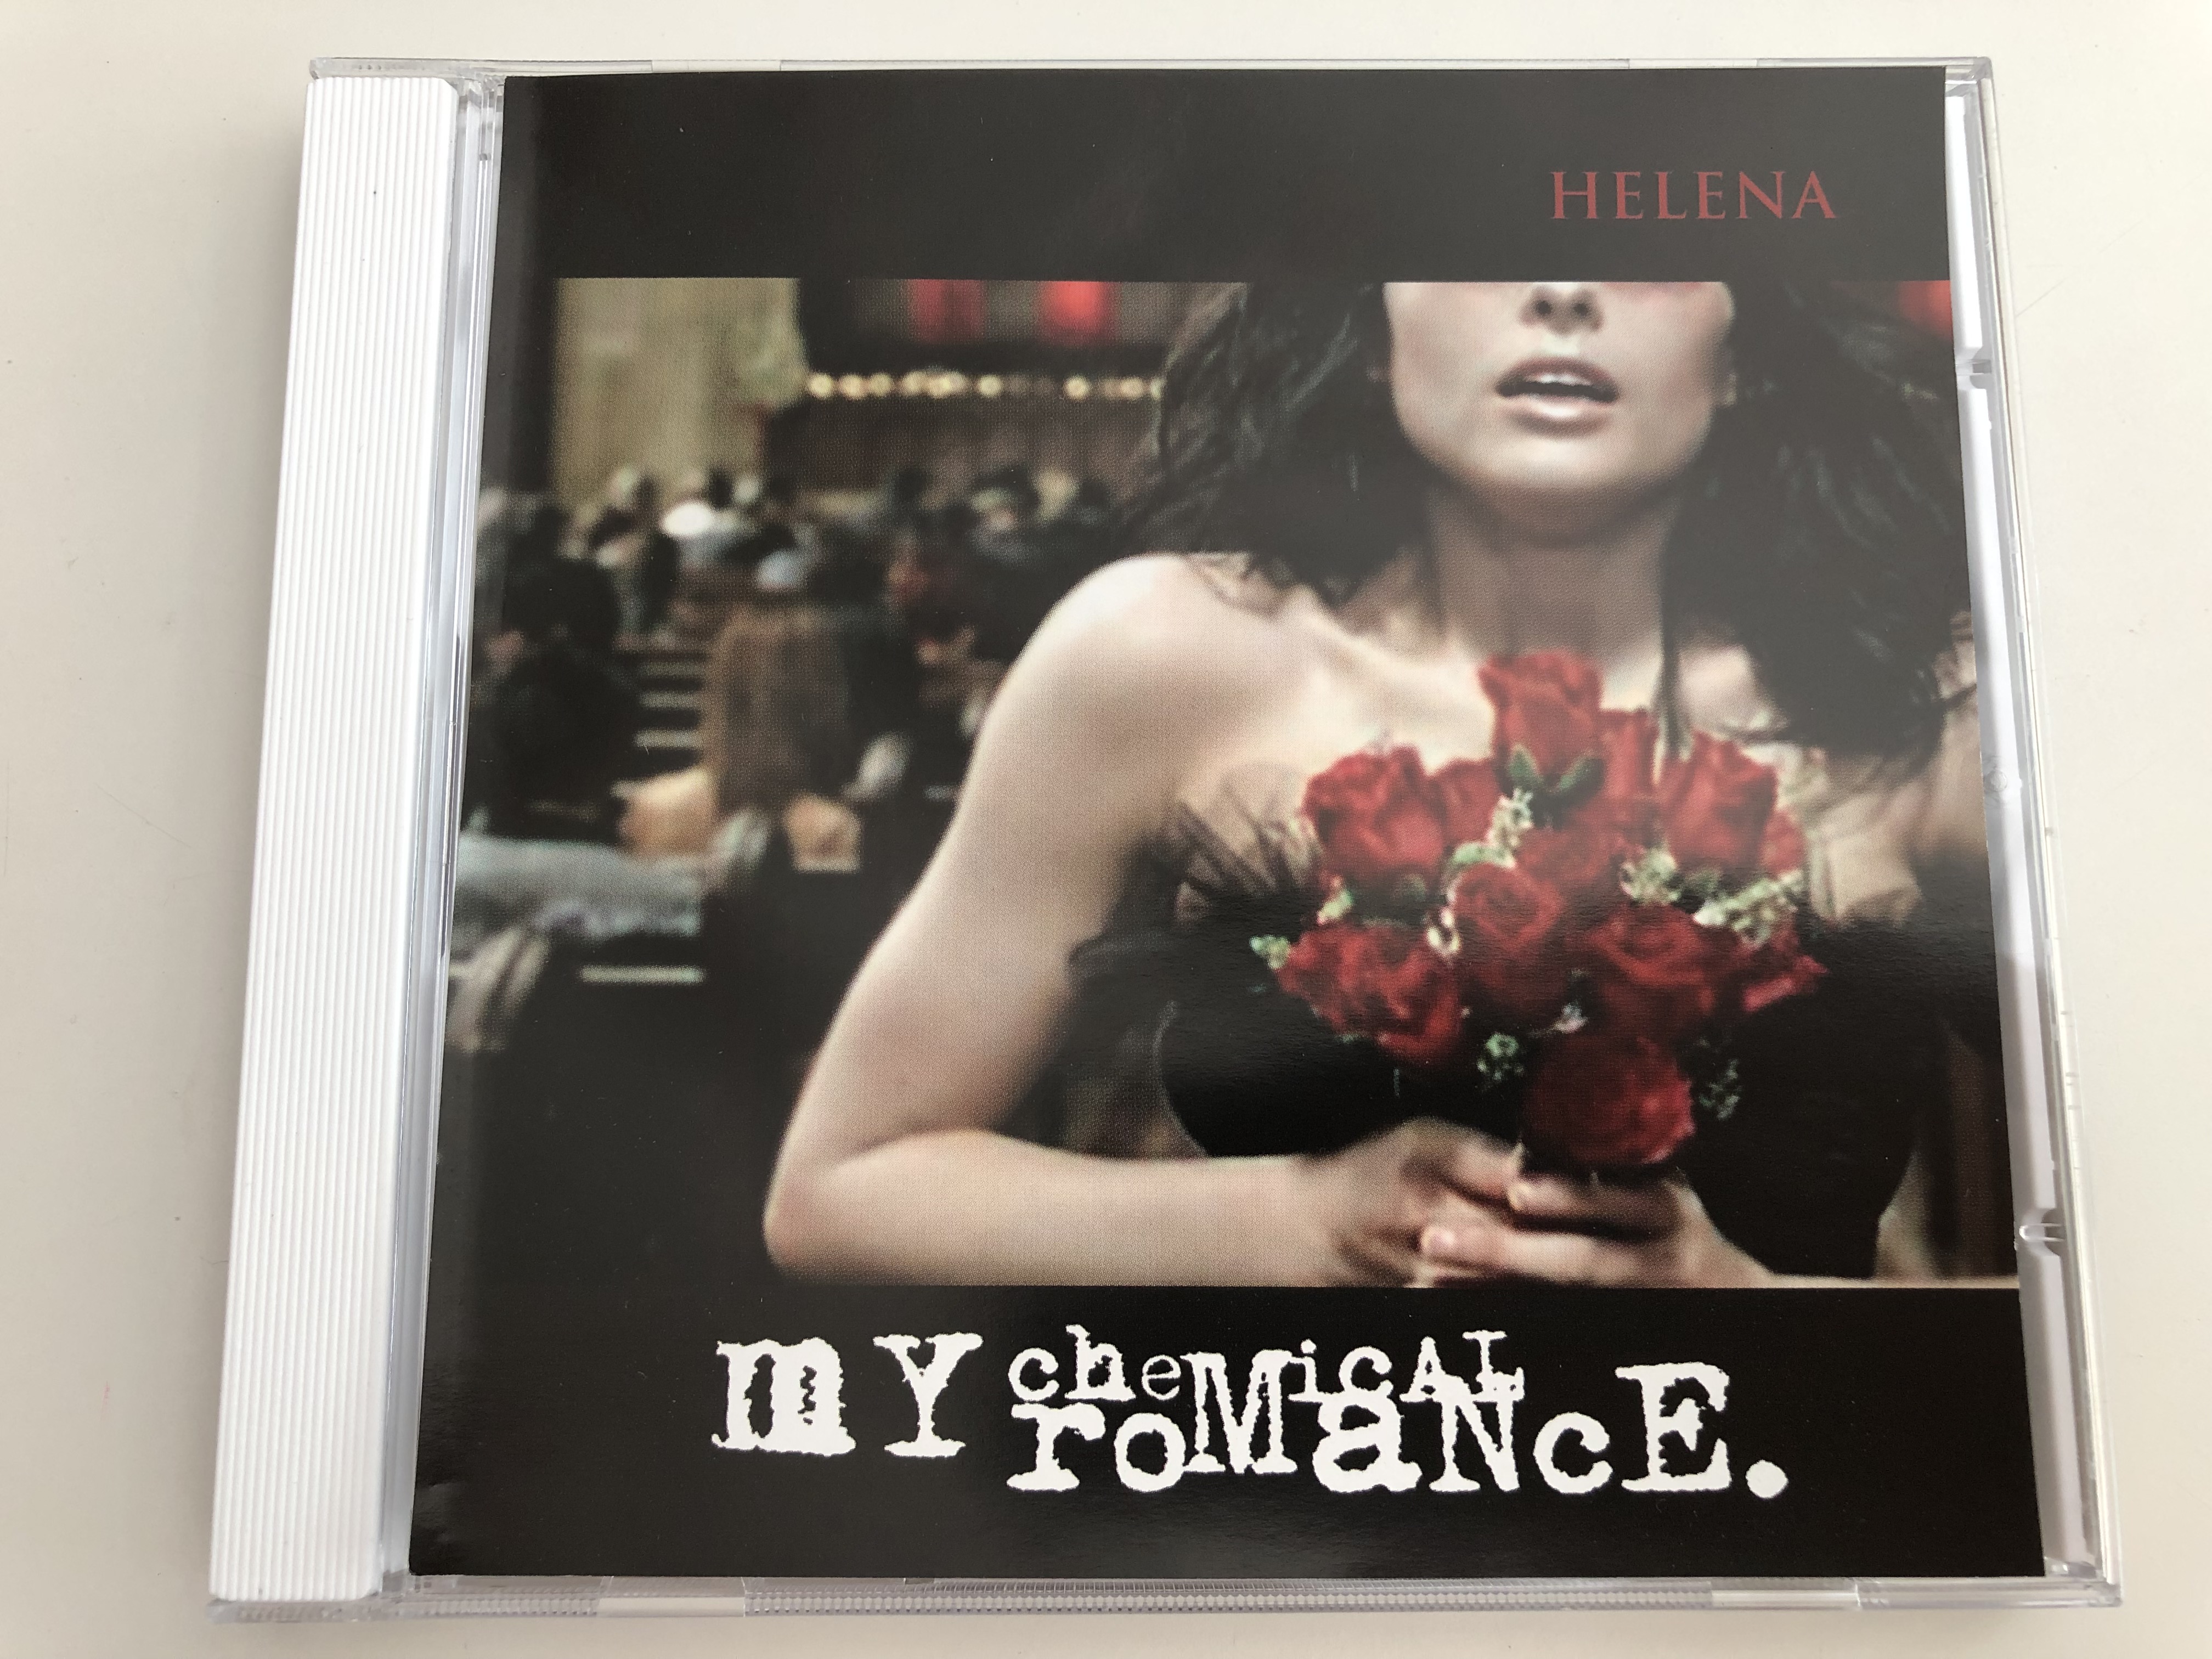 my-chemical-romance-helena-dvd-2005-w671dvd-reprise-records-1-.jpg